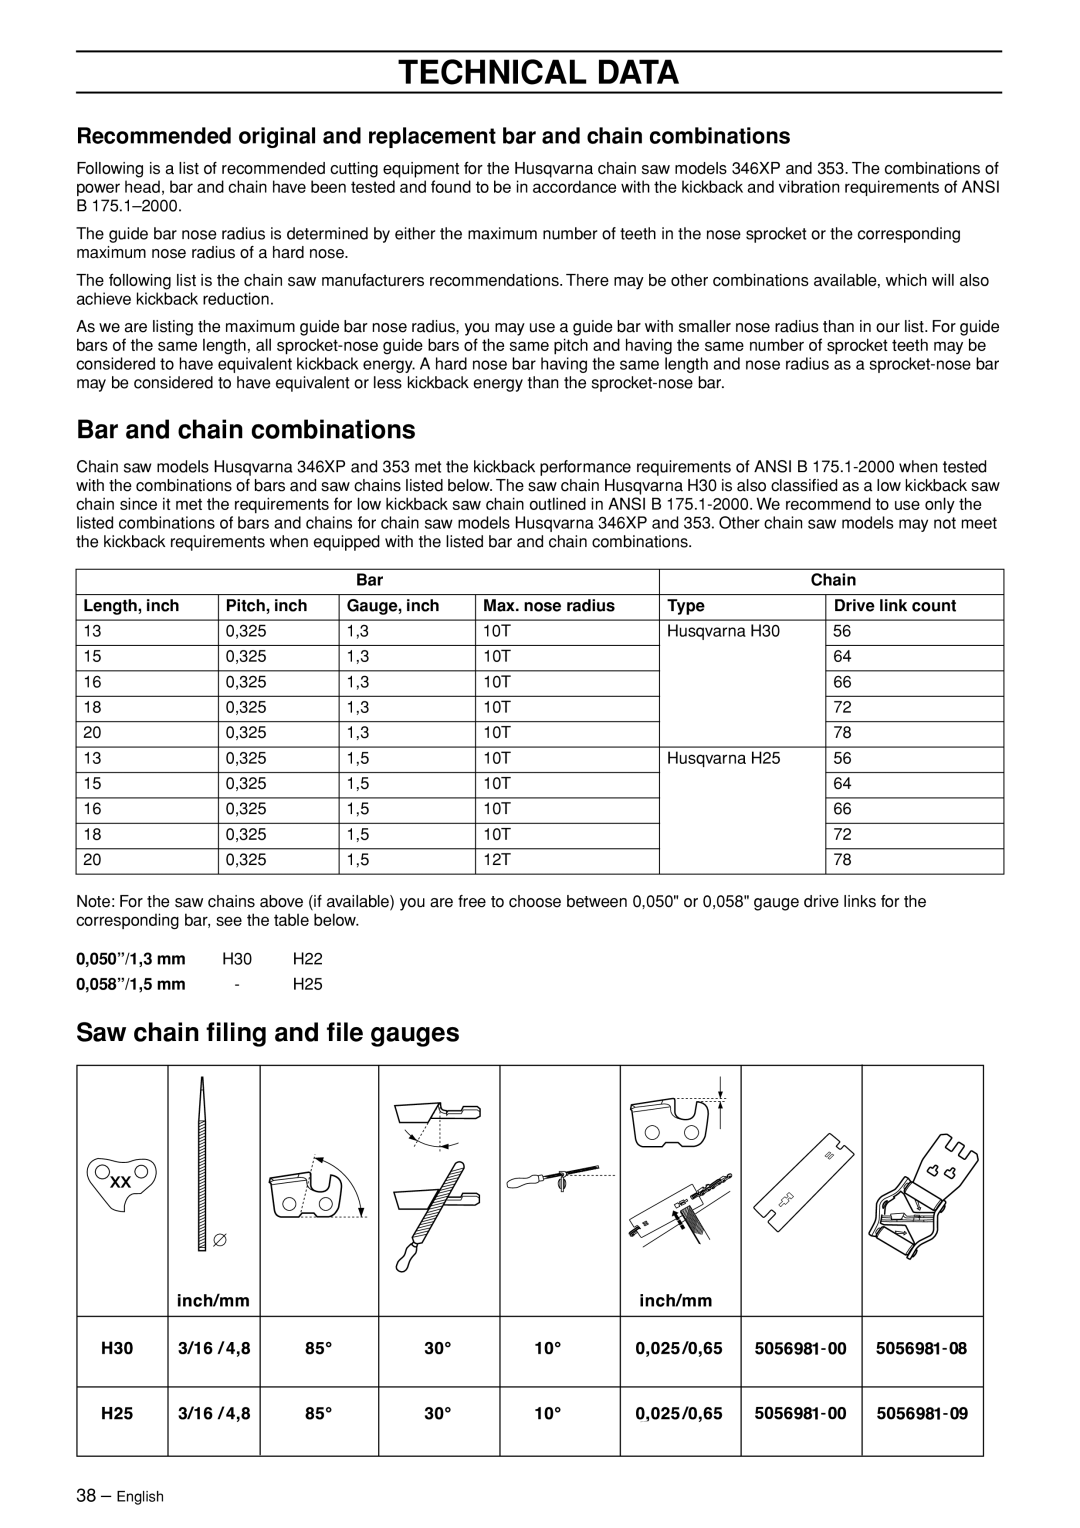 Husqvarna 346XP EPA II manual Bar and chain combinations, Saw chain ﬁling and ﬁle gauges, Technical Data 